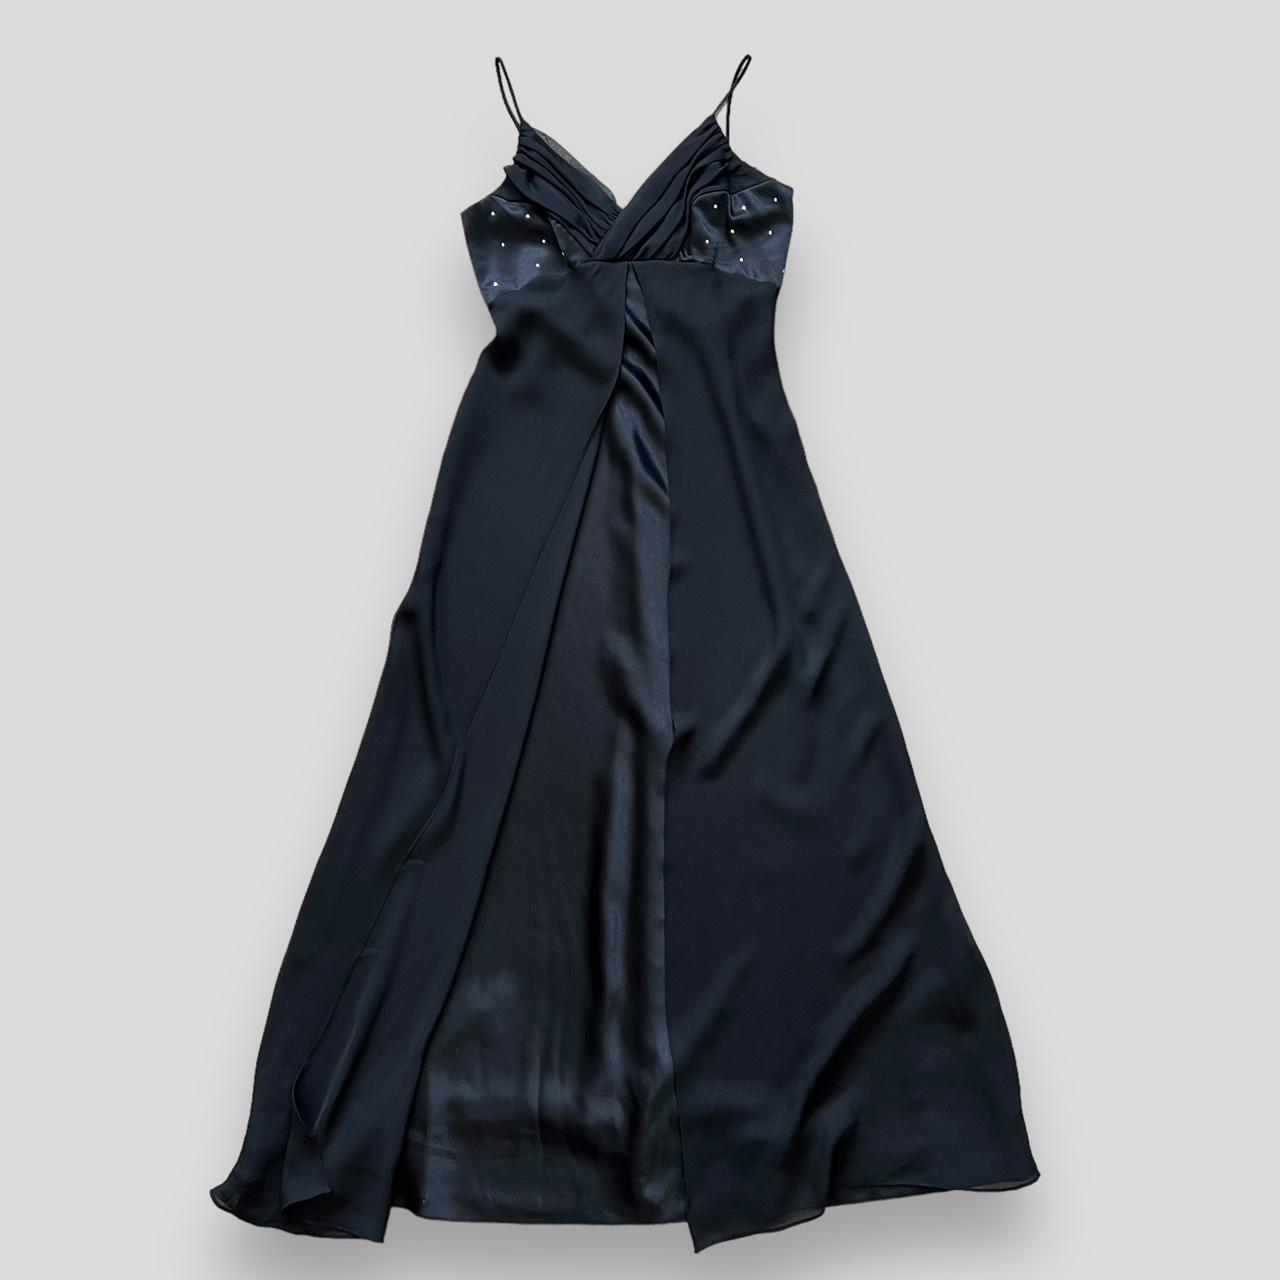 Aspeed Design Women's Black Dress (4)